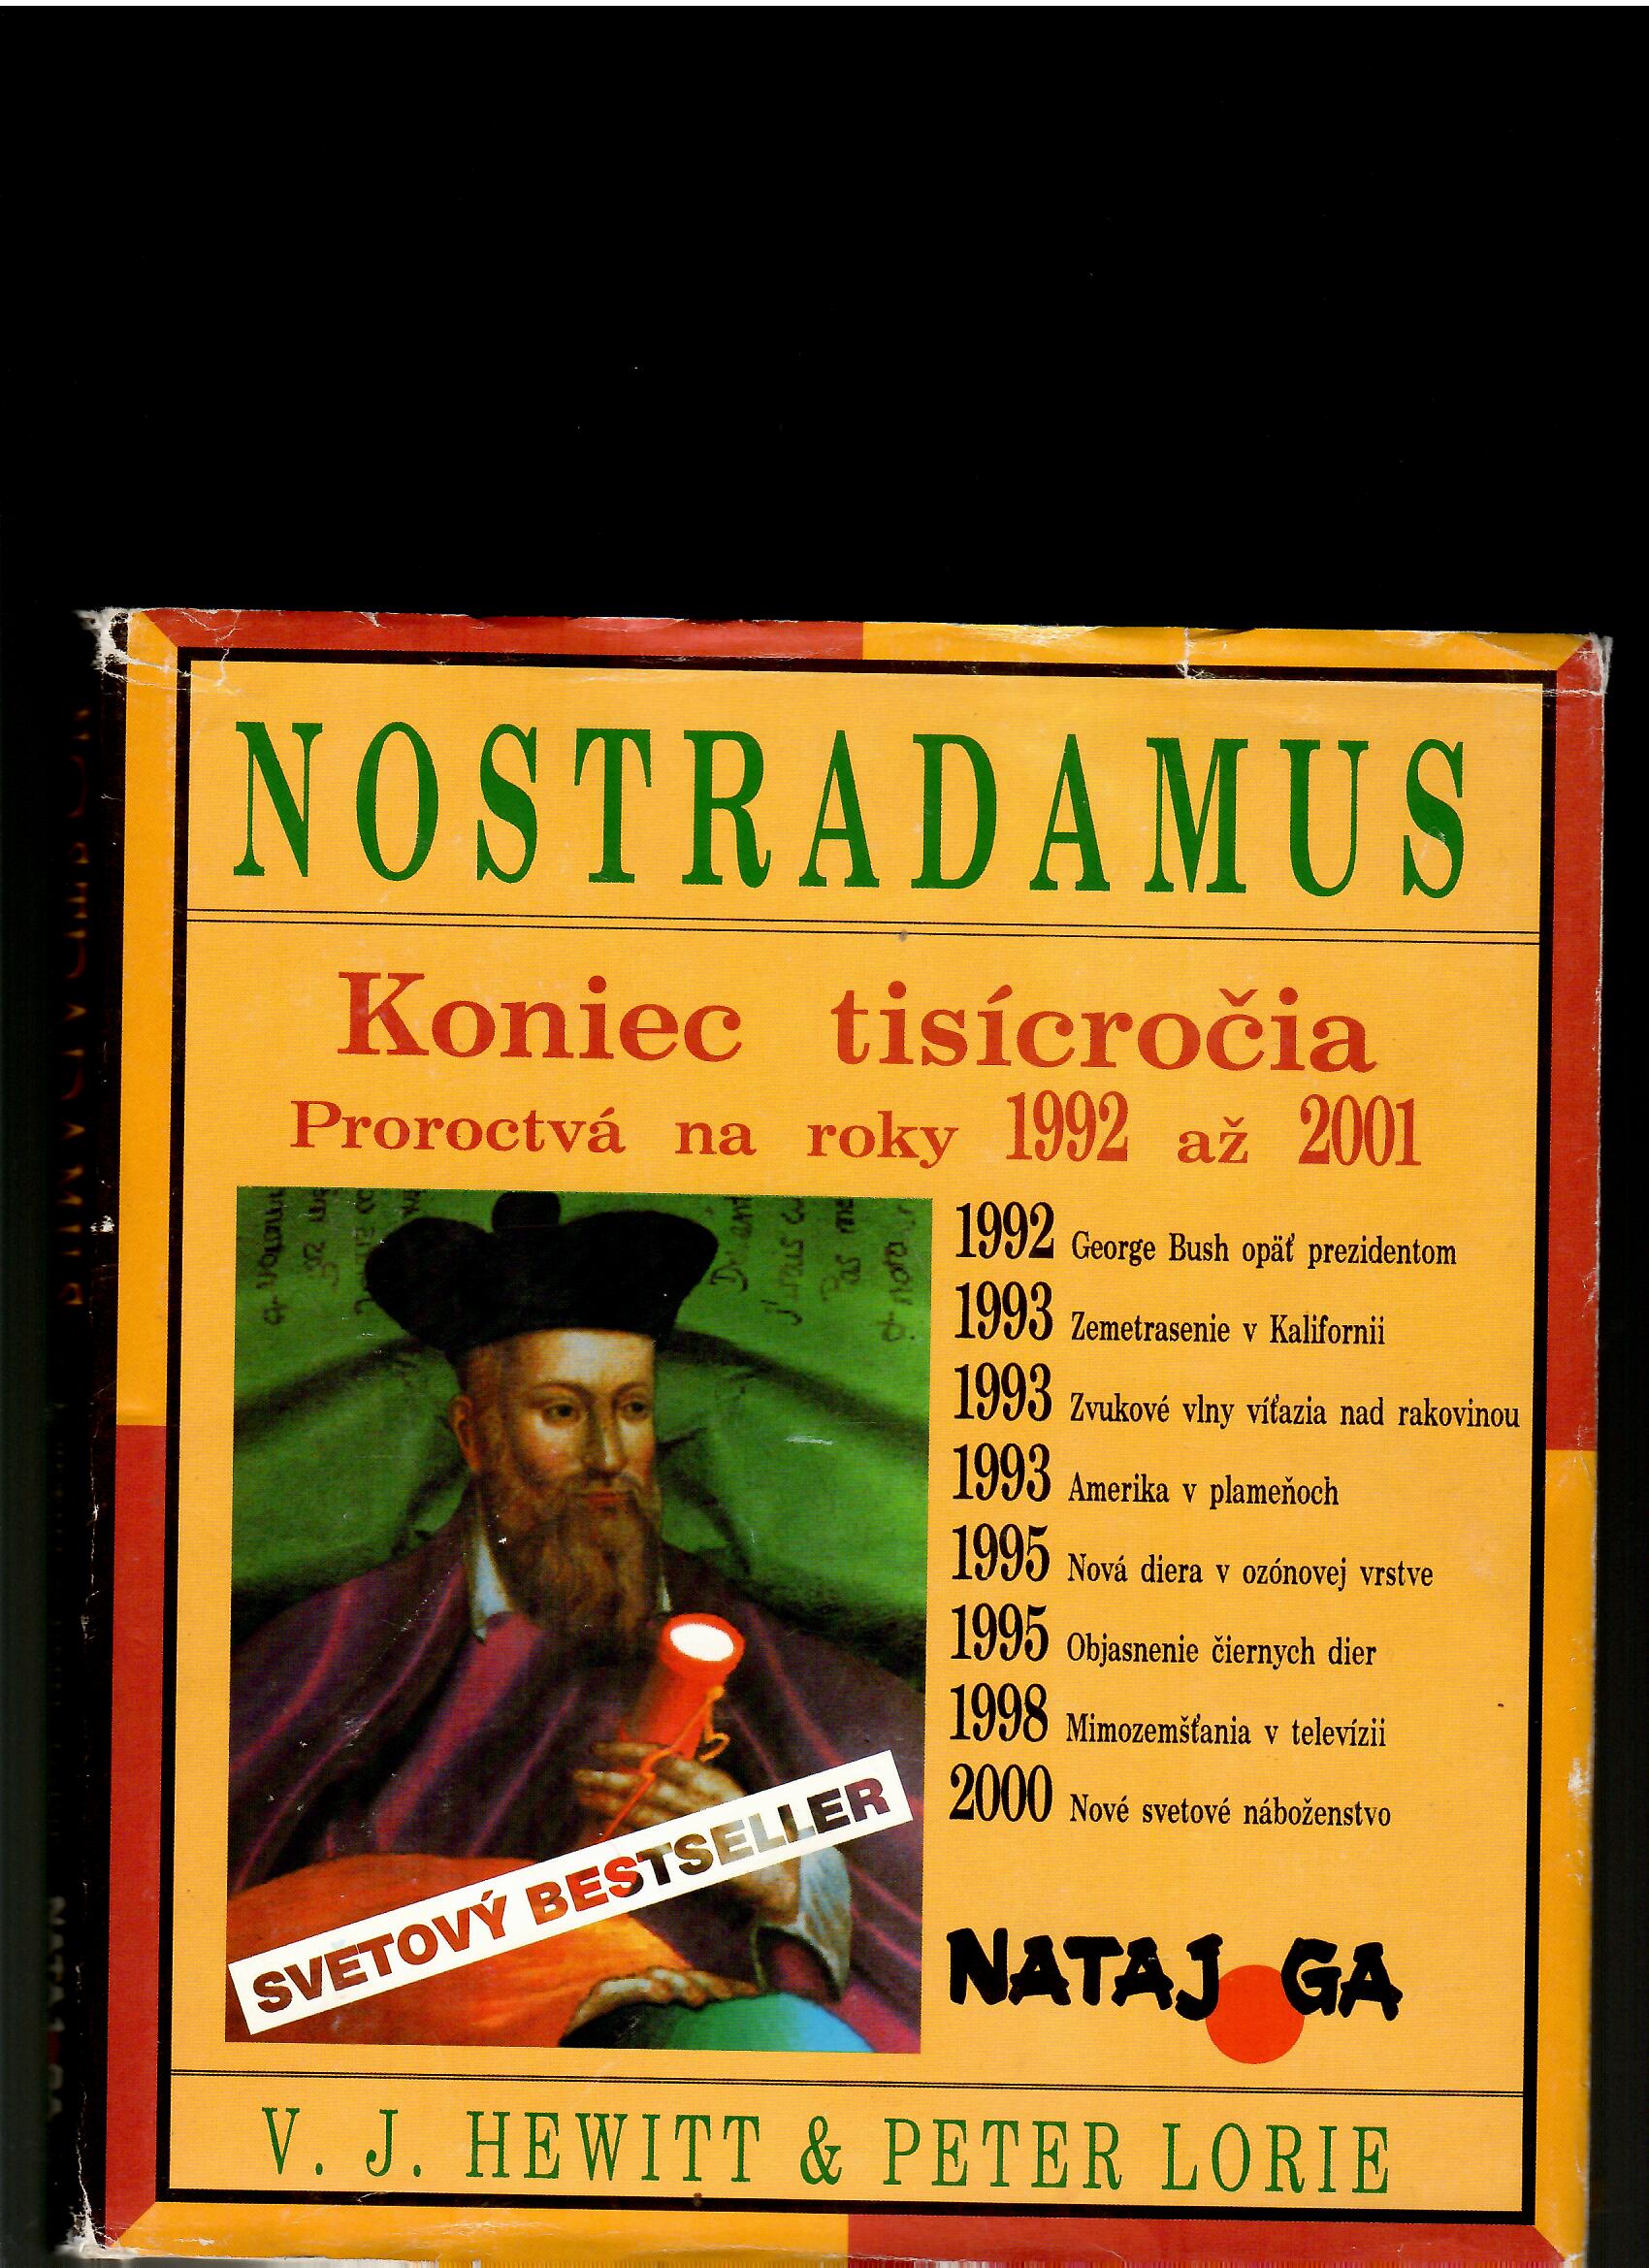 V. J. Hewitt, P. Lorie: Nostradamus. Koniec tisícročia, proroctvá 1992-2001